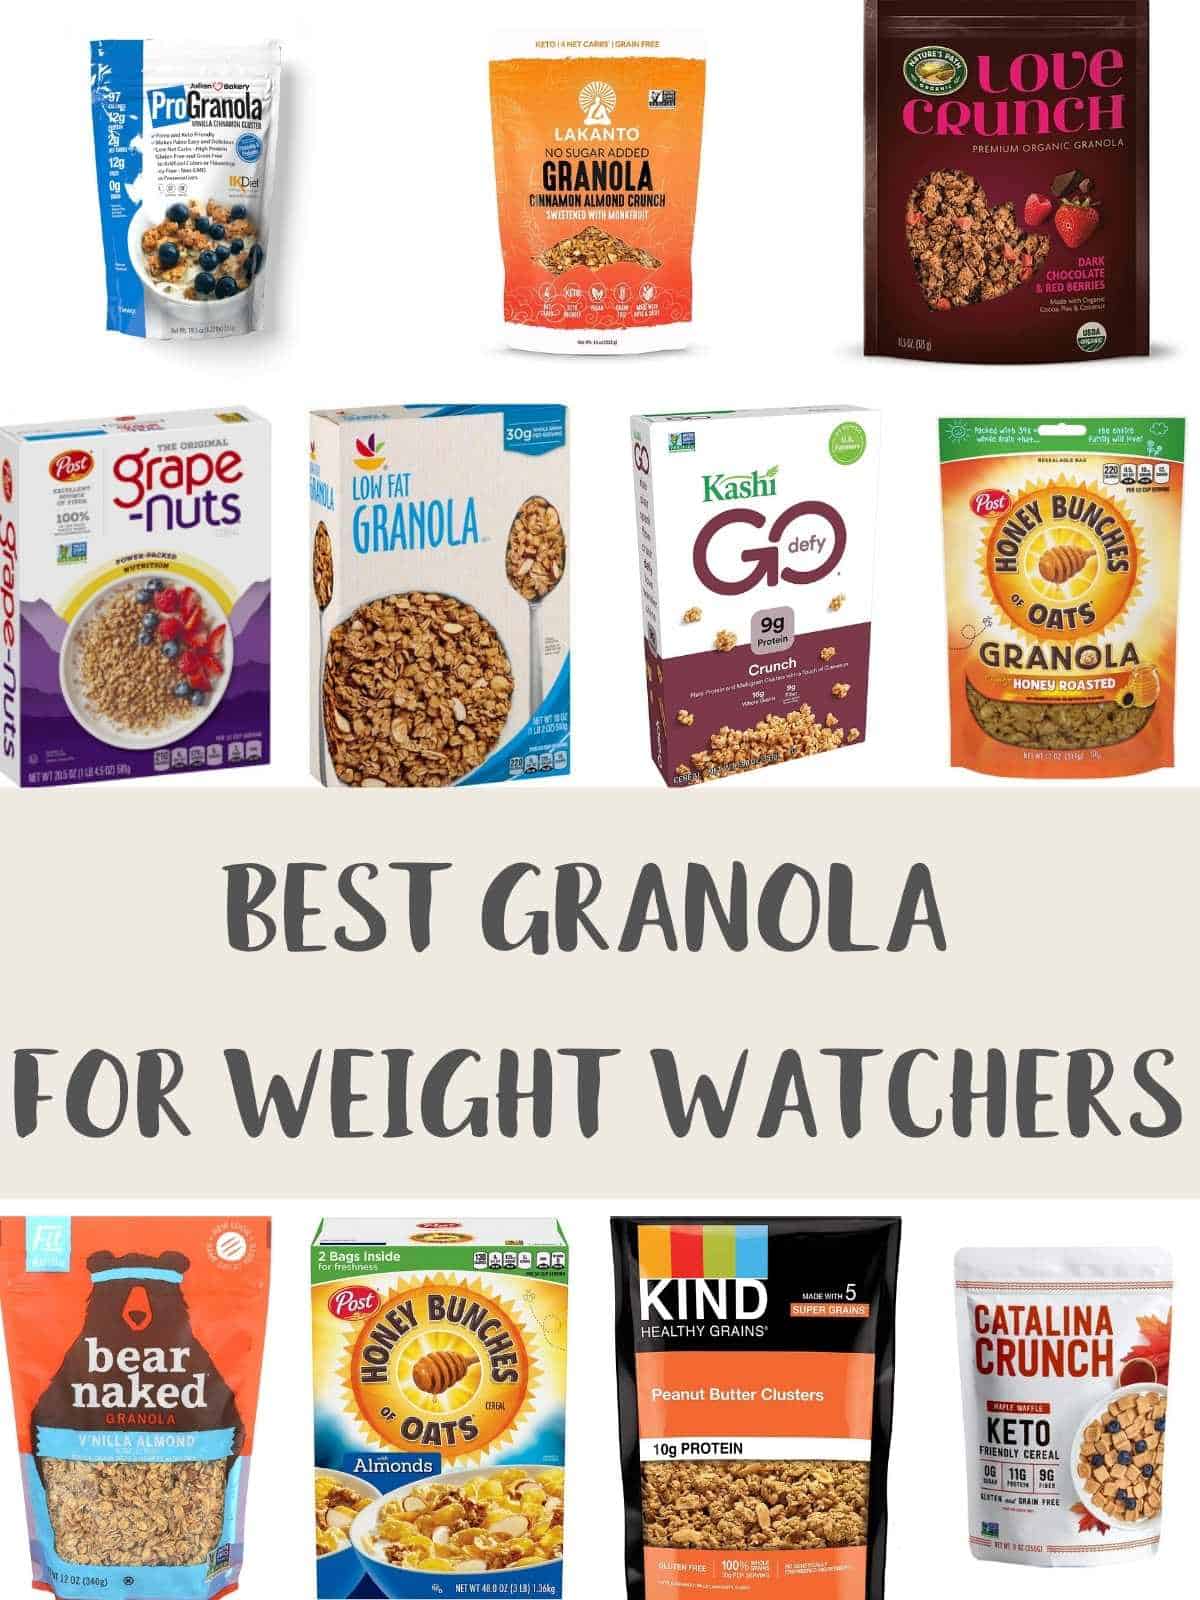 Best Granola for Weight Watchers